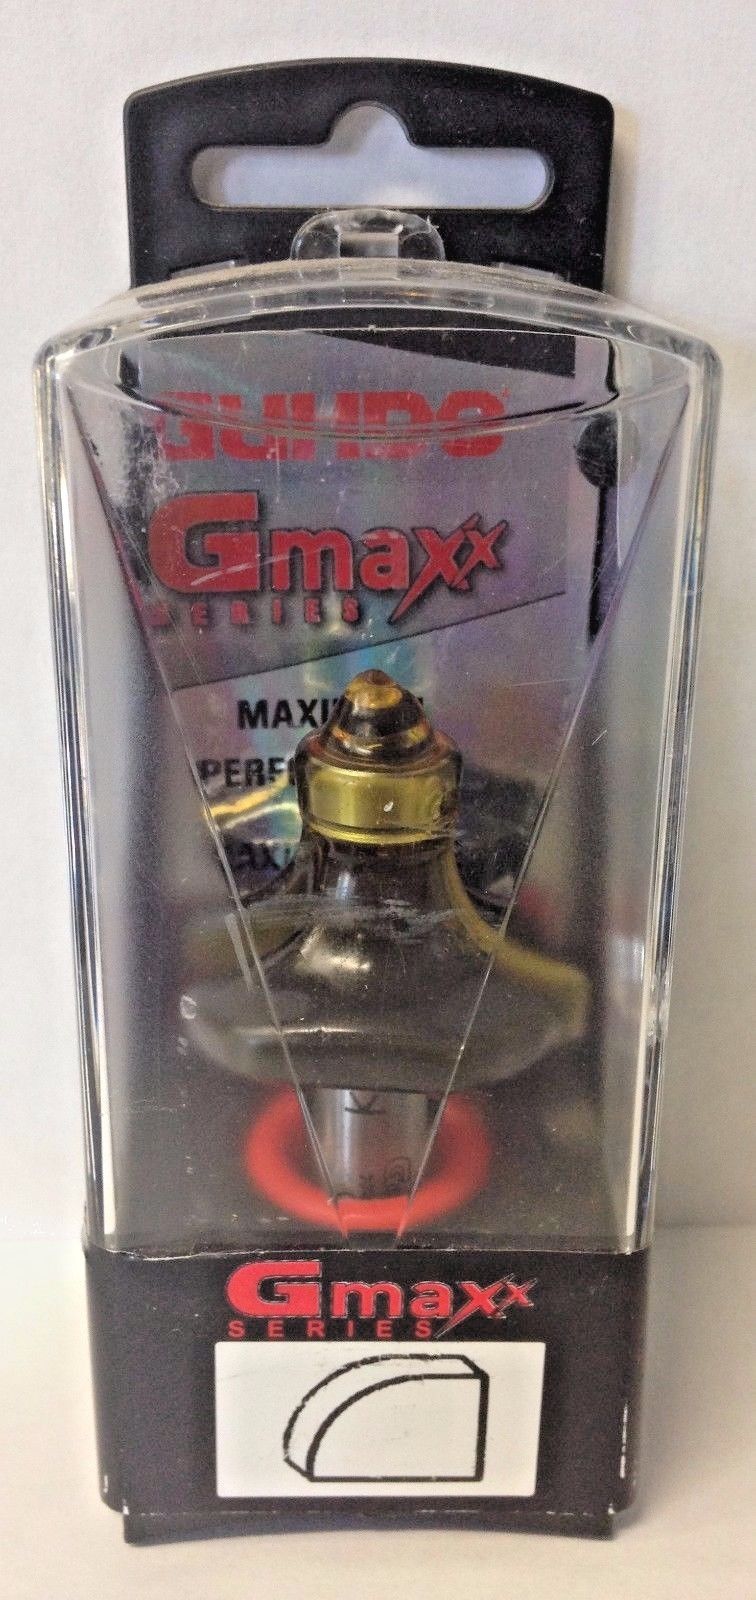 Gmaxx 7741.9048 1/2" Carbide Tipped Roundover Router Bit 1/2" Shank German